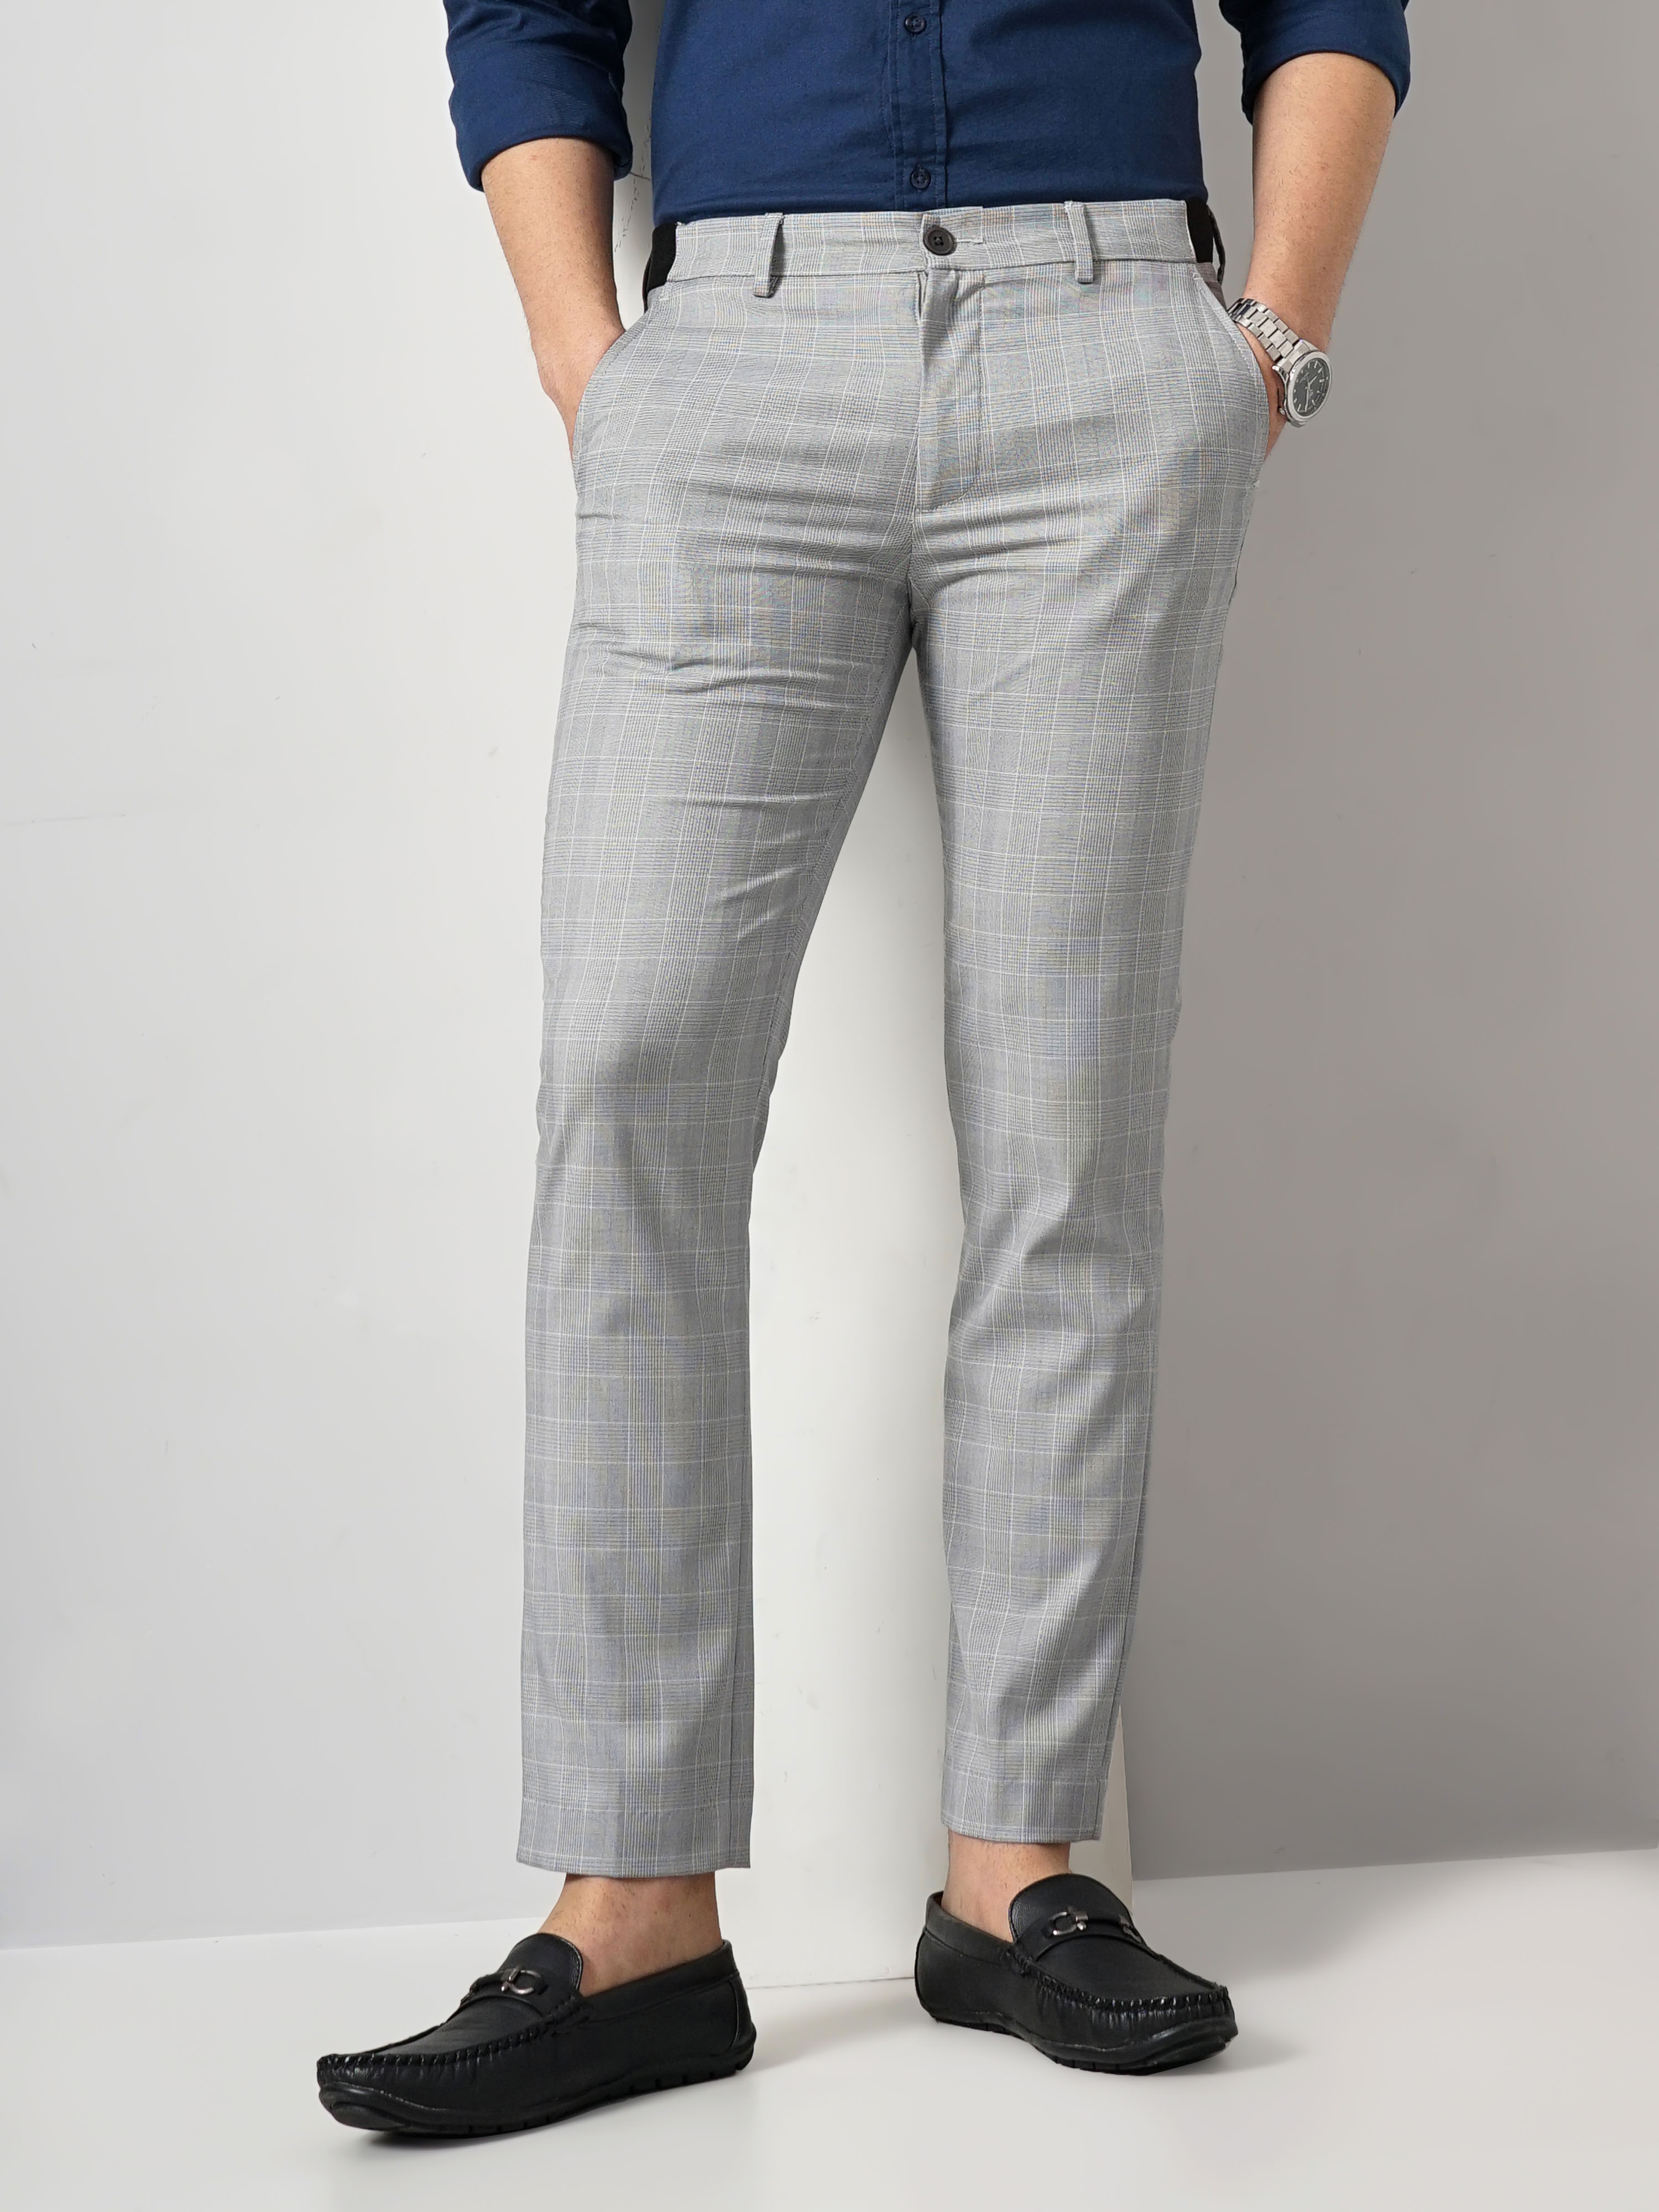 Celio Men's Solid Formal Trousers